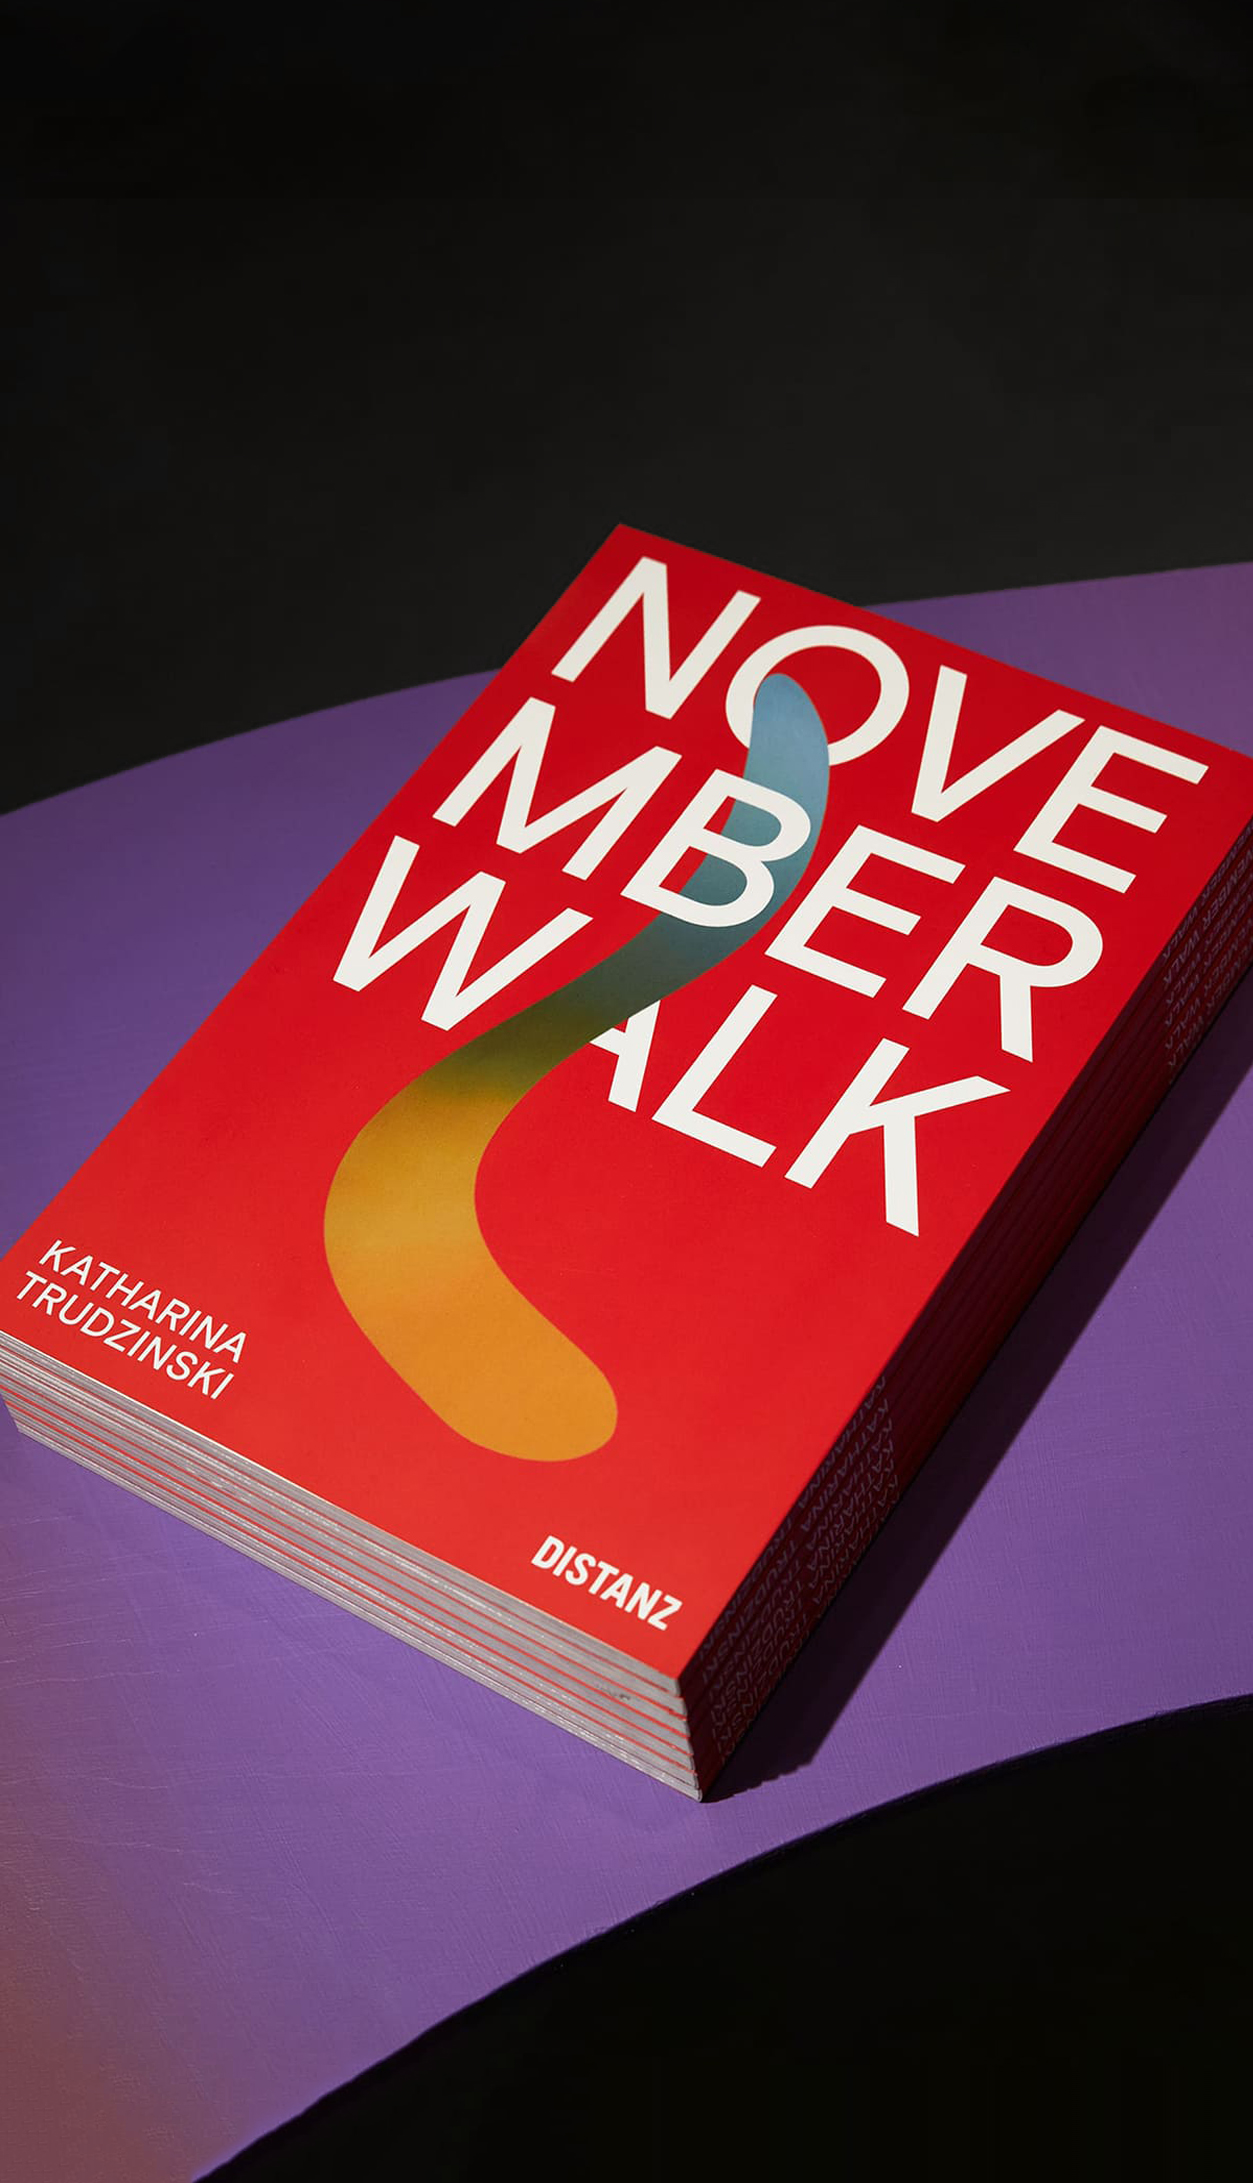 <p>NOVEMBER WALK – Book</p>
